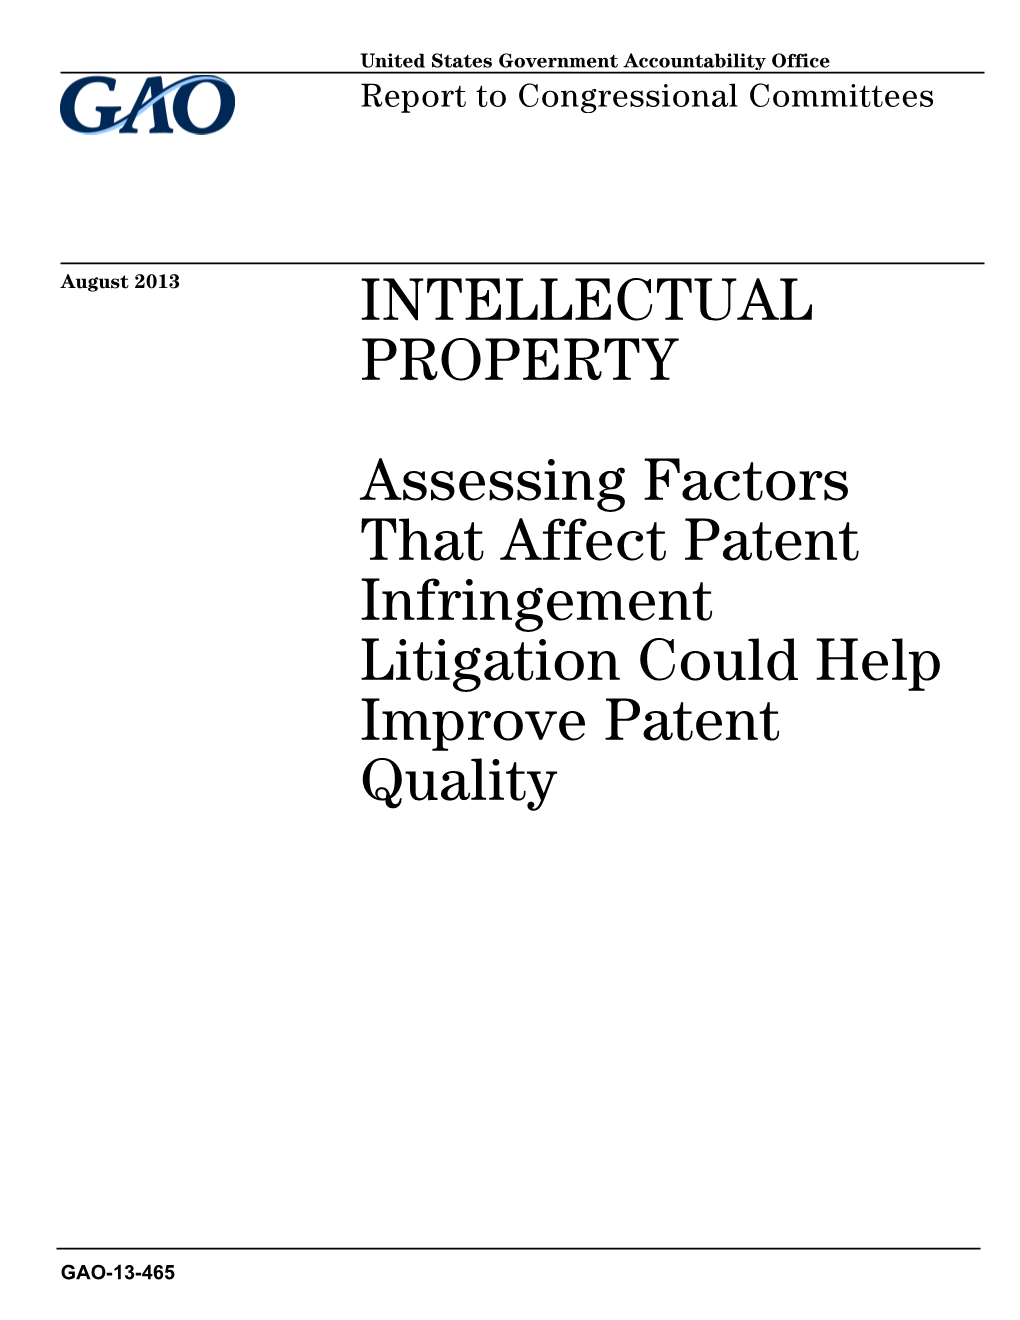 Assessing Factors That Affect Patent Infringement Litigation Could Help Improve Patent Quality